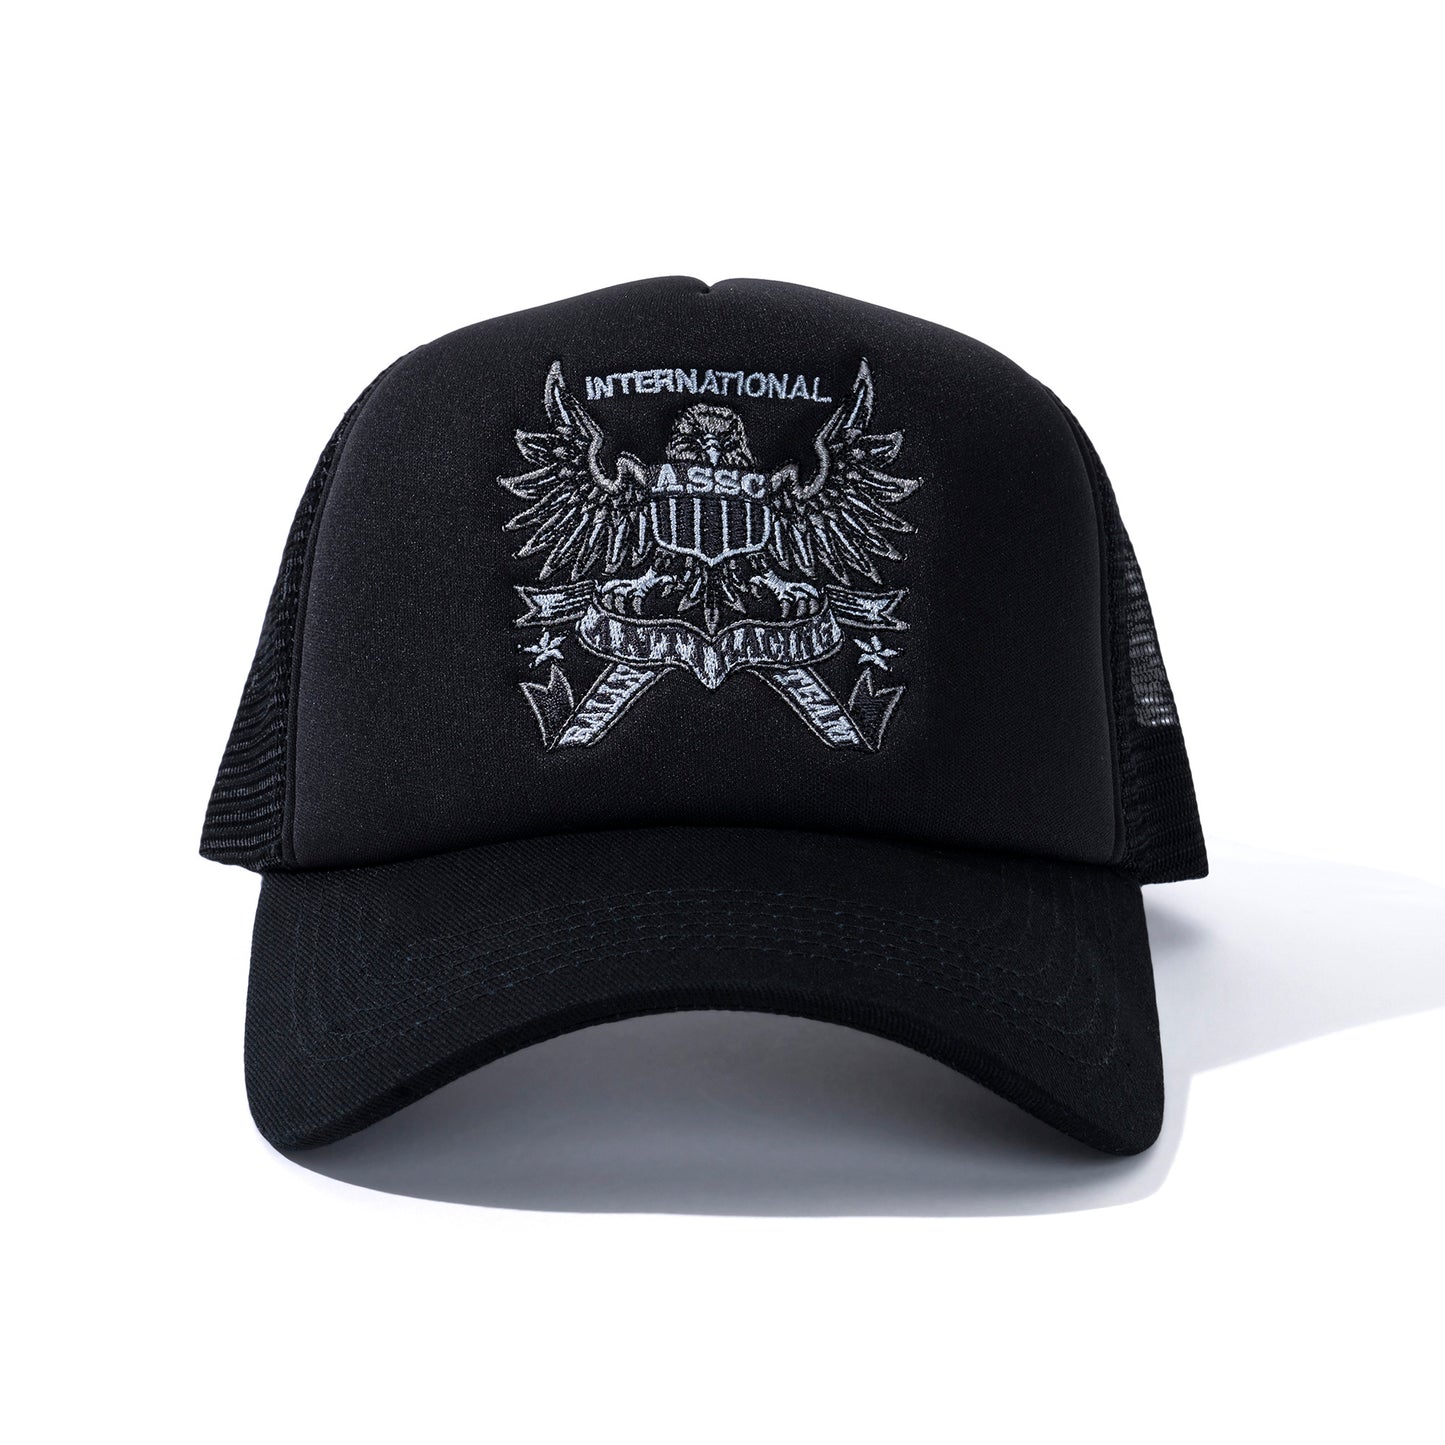 Overanxious Trucker Hat - Black